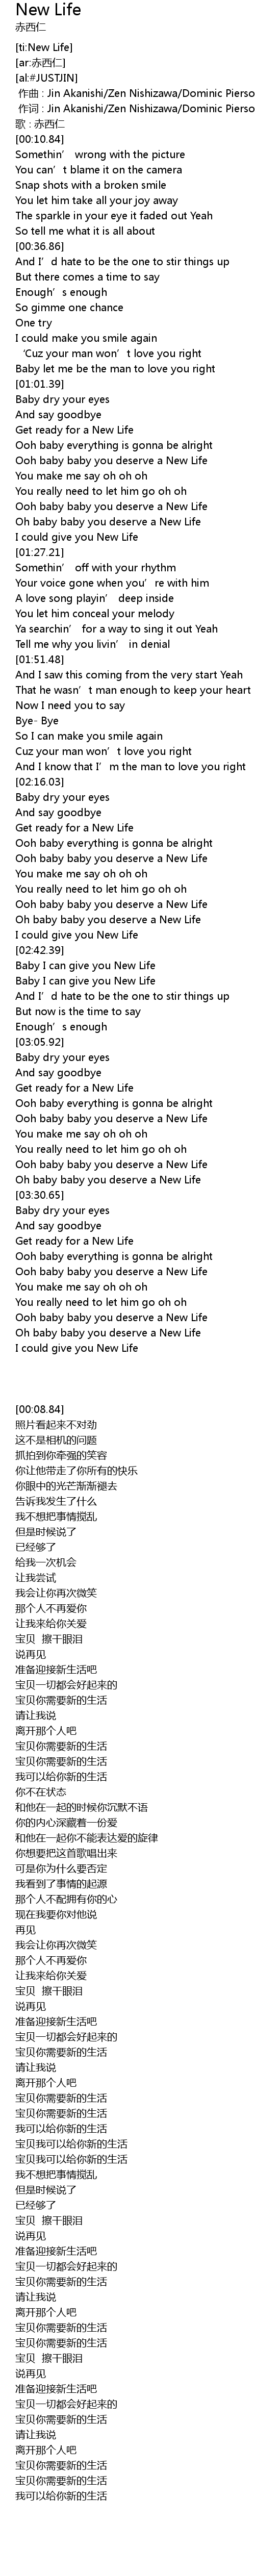 Dukterėcia Idioma Belaidis My Baby Love Song Lyrics Rubberlesque Com